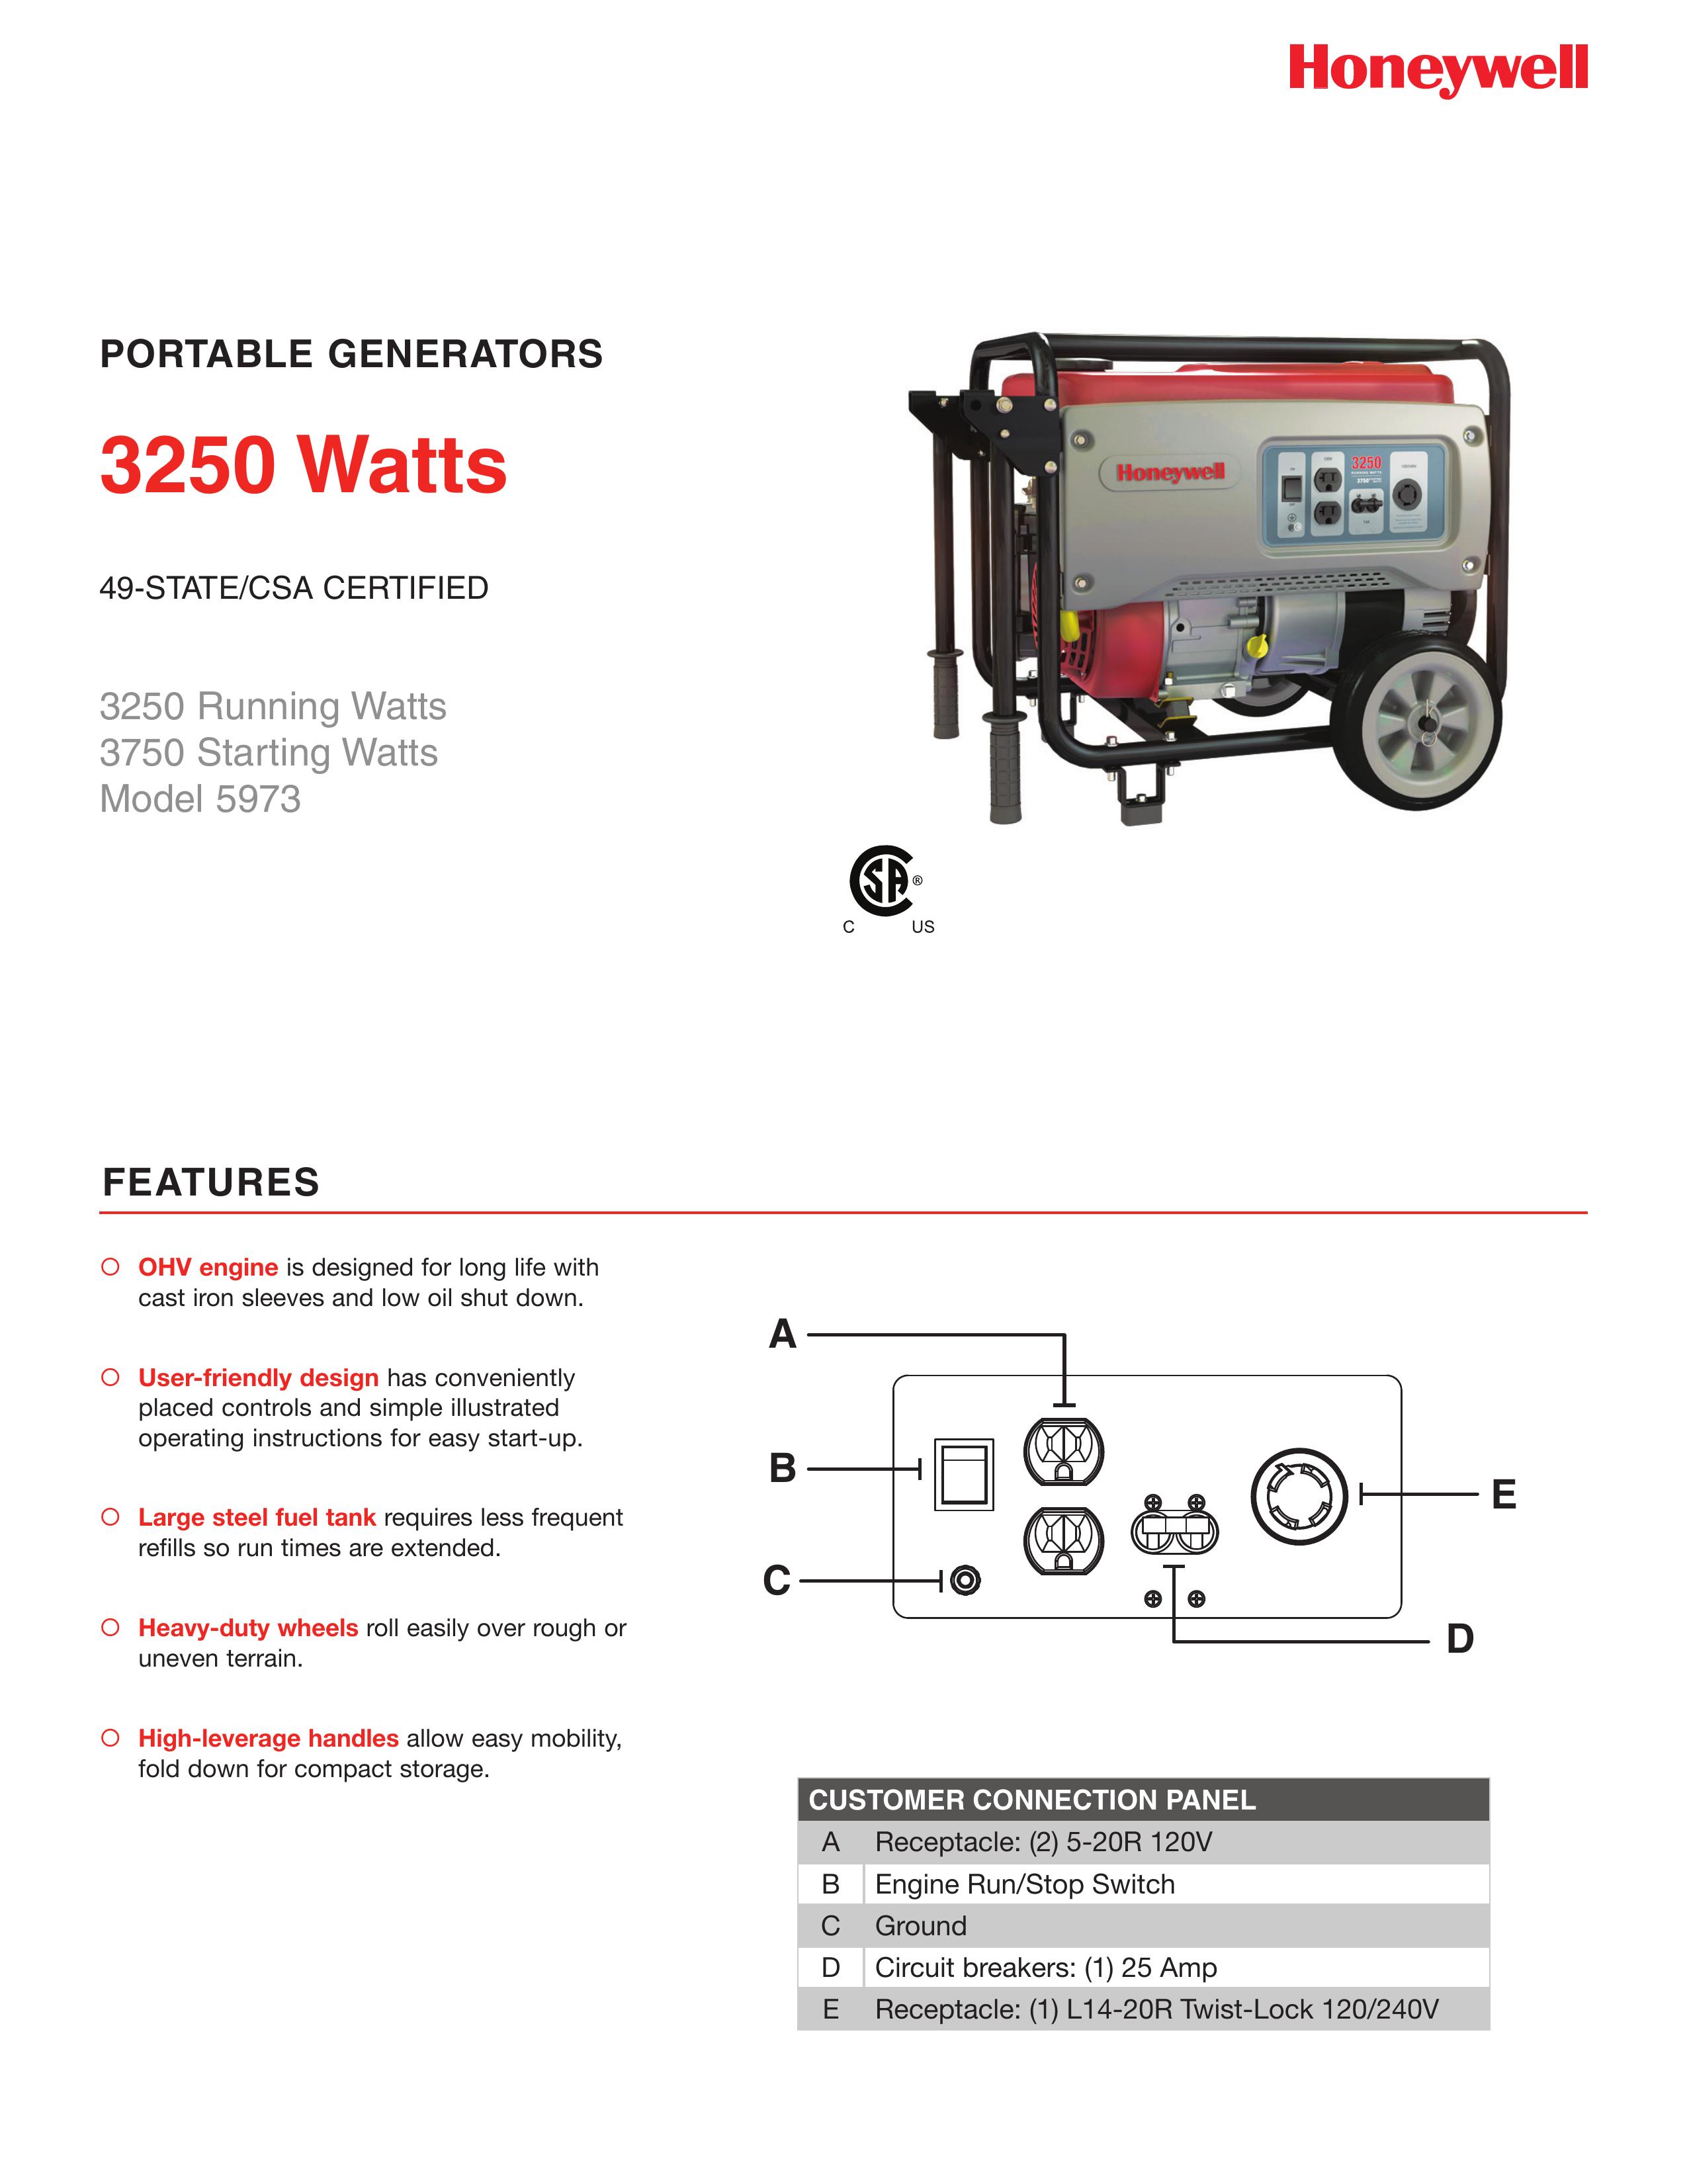 Honeywell 5973 Portable Generator User Manual